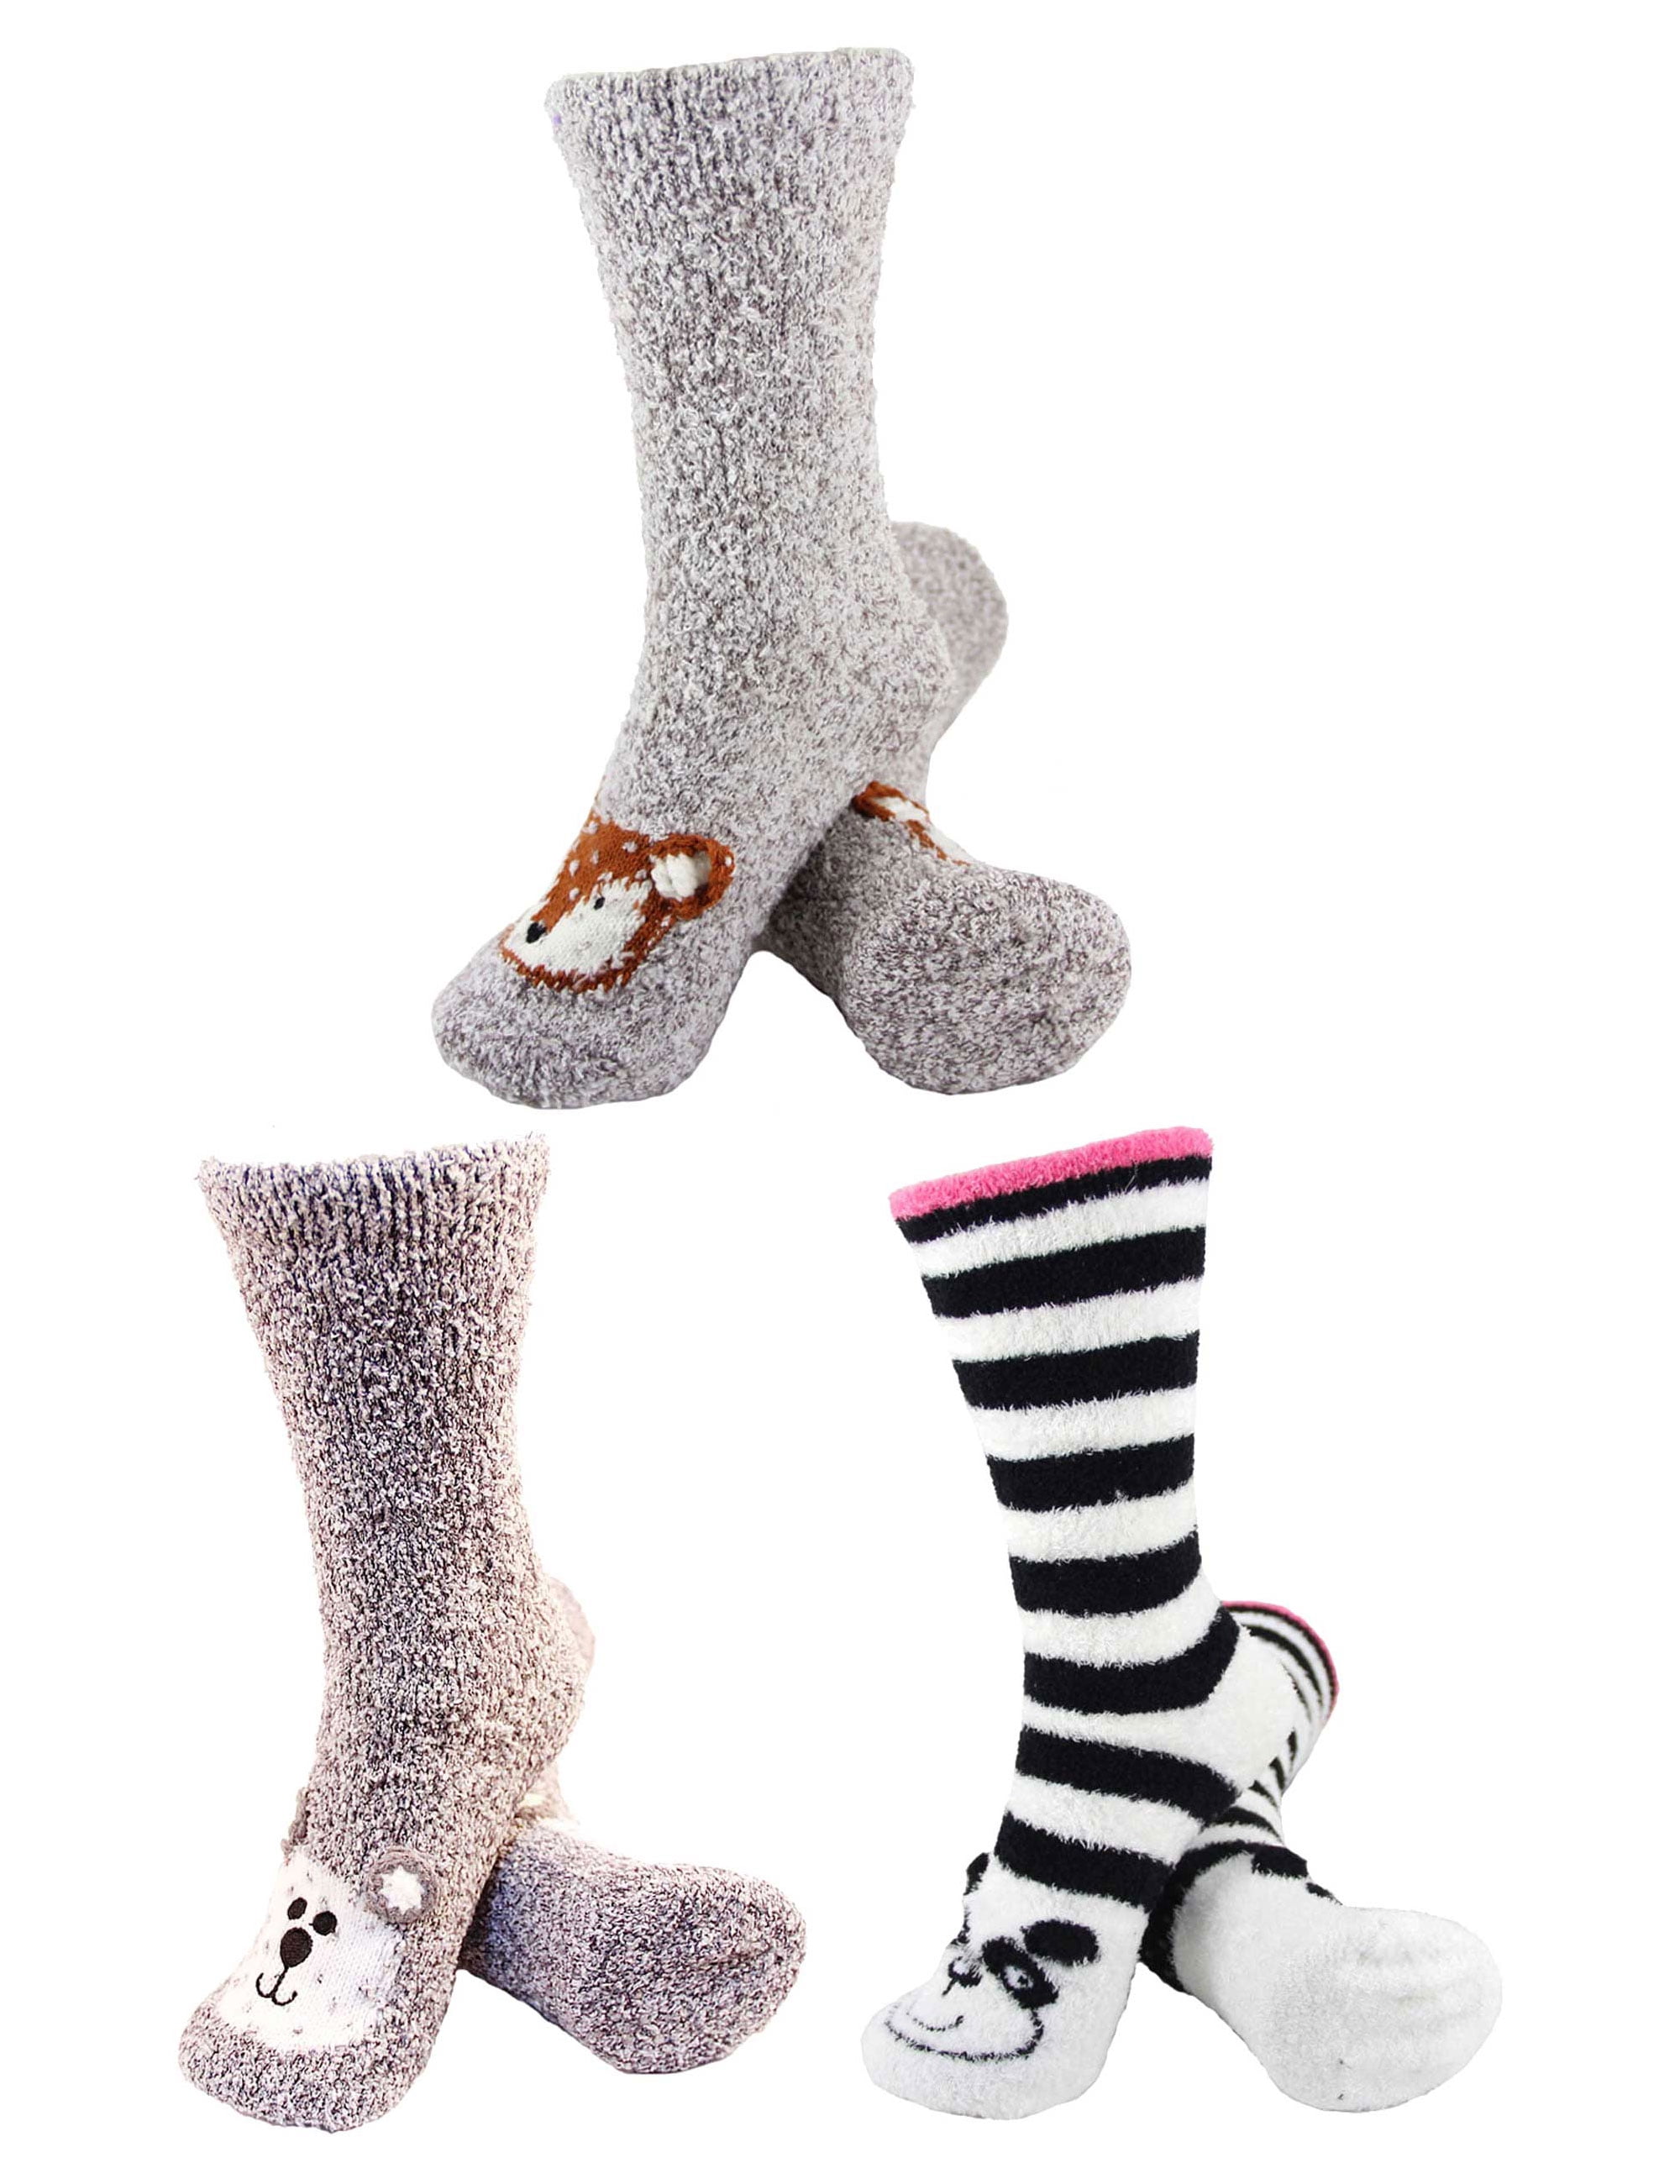 BambooMN Socks Super Soft Warm Cute Animal Non-Slip Fuzzy Winter Crew Socks ...